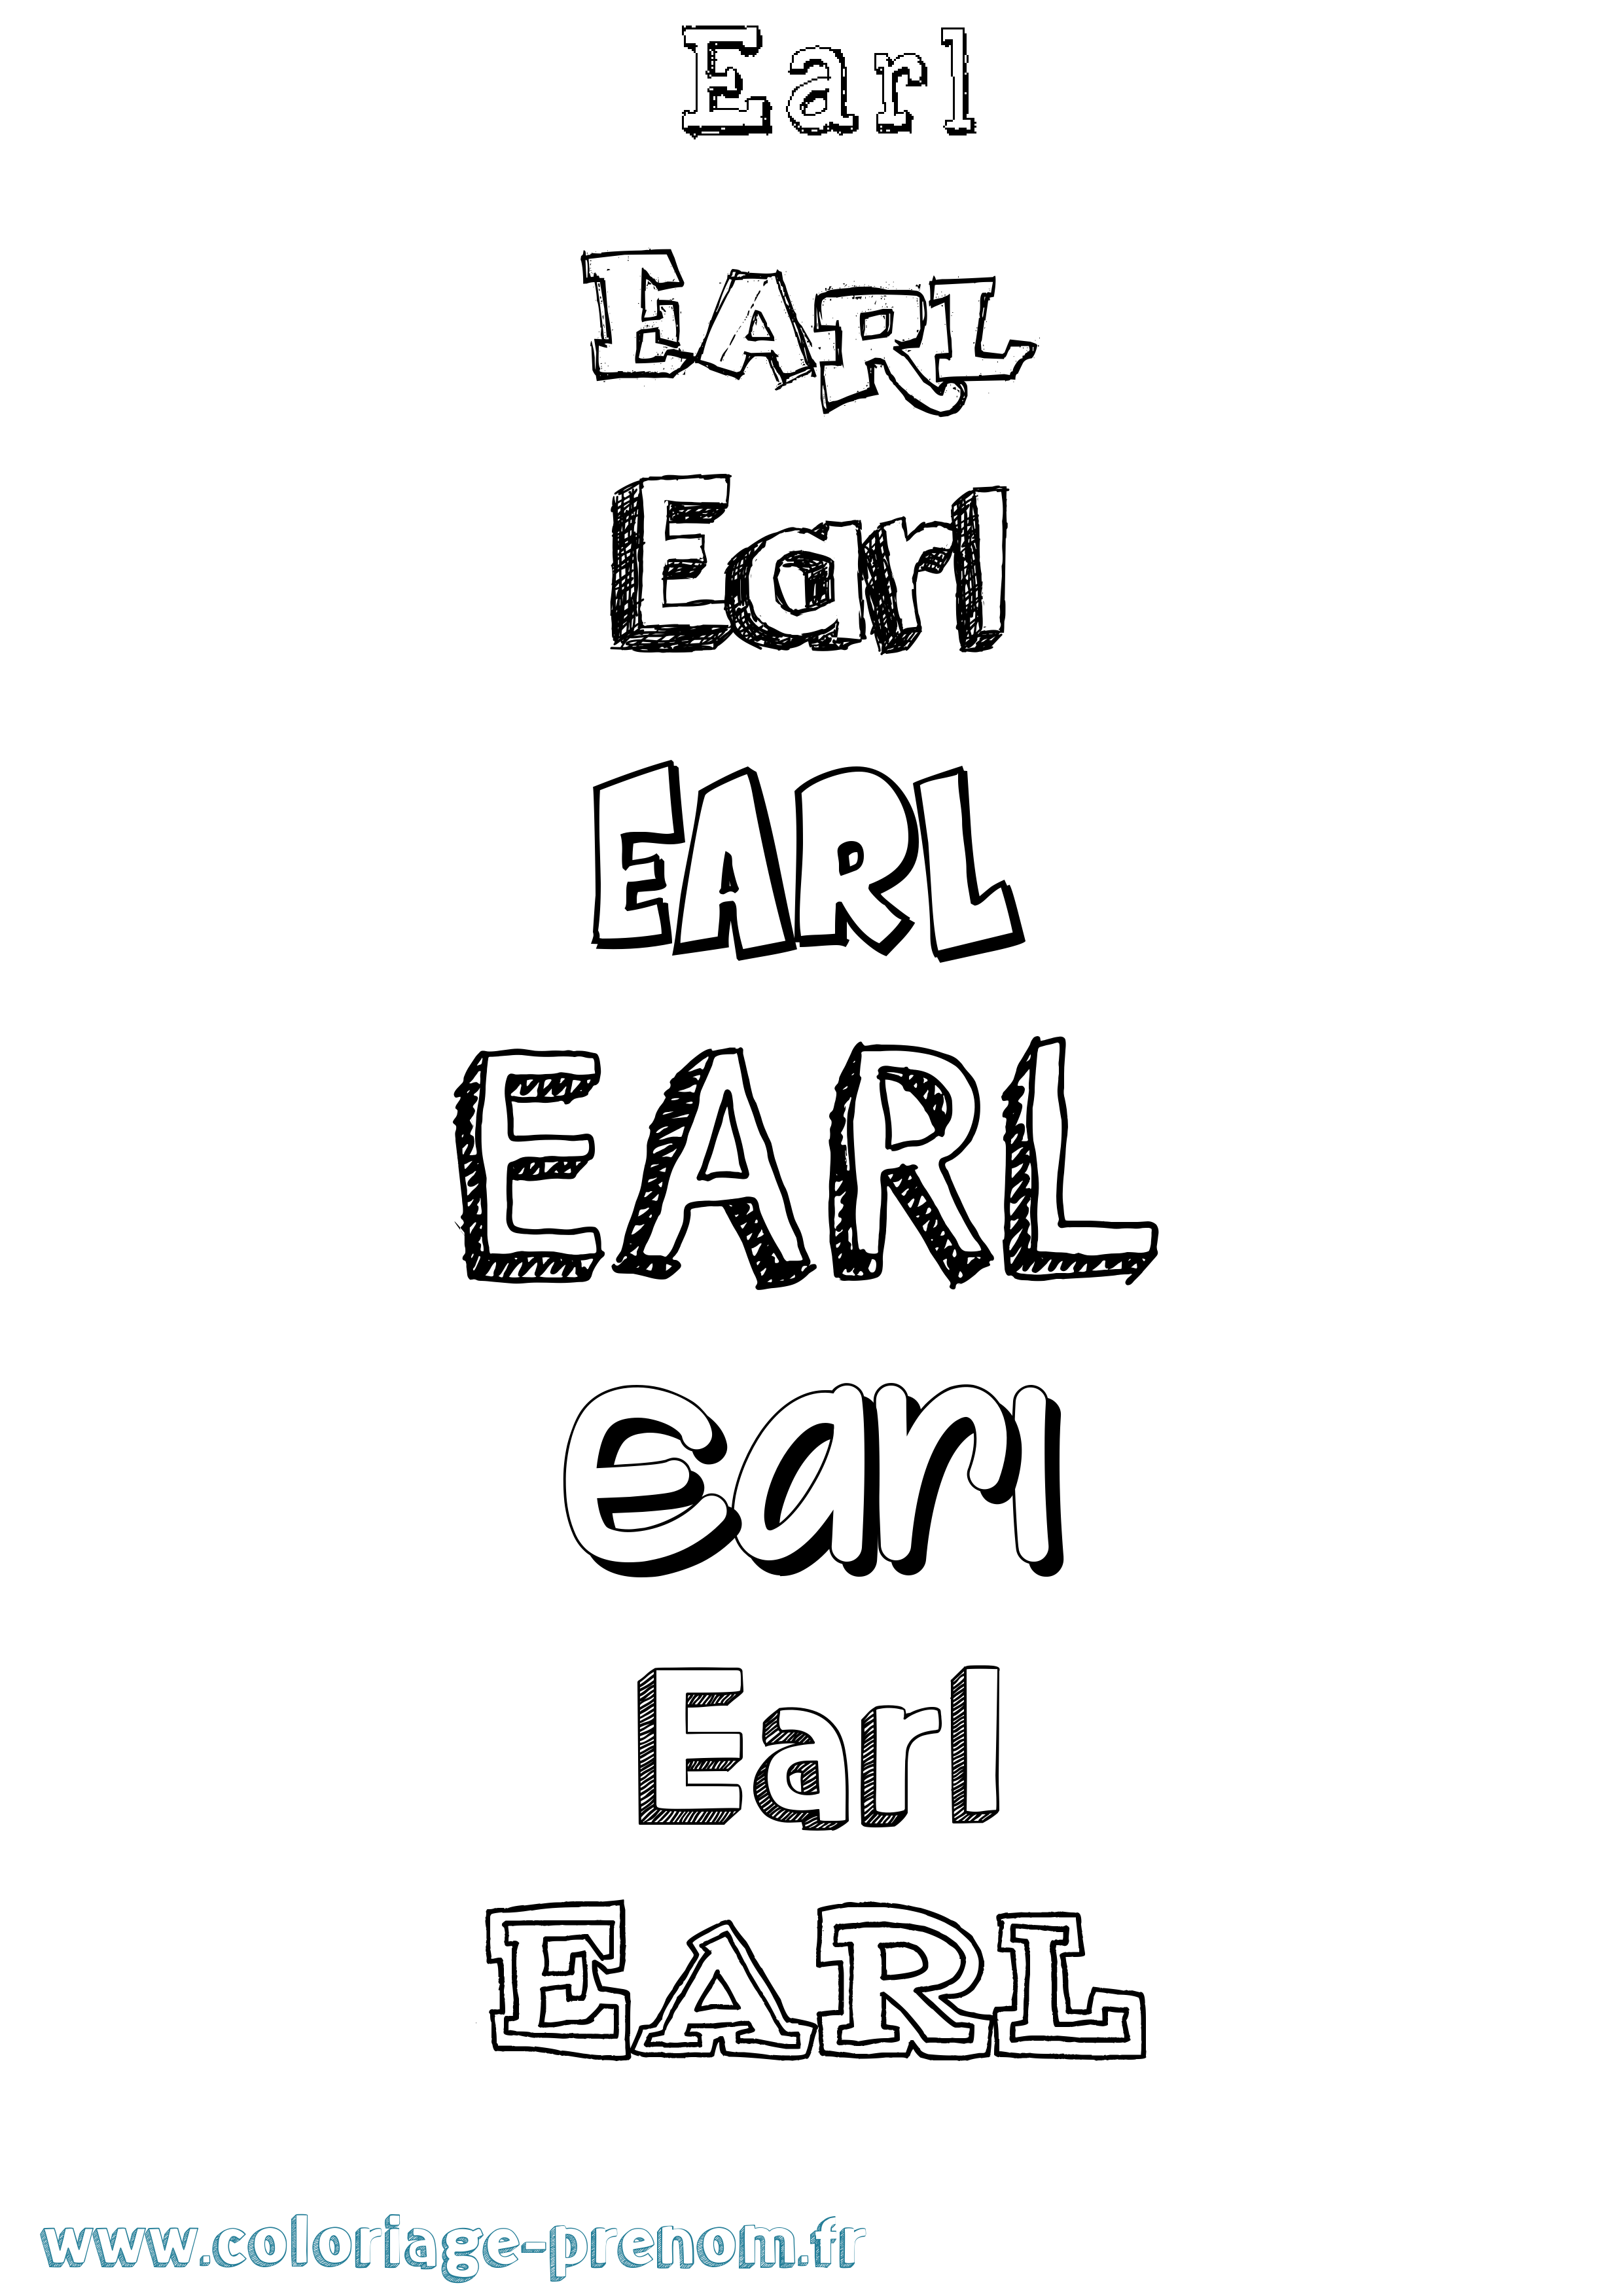 Coloriage prénom Earl Dessiné